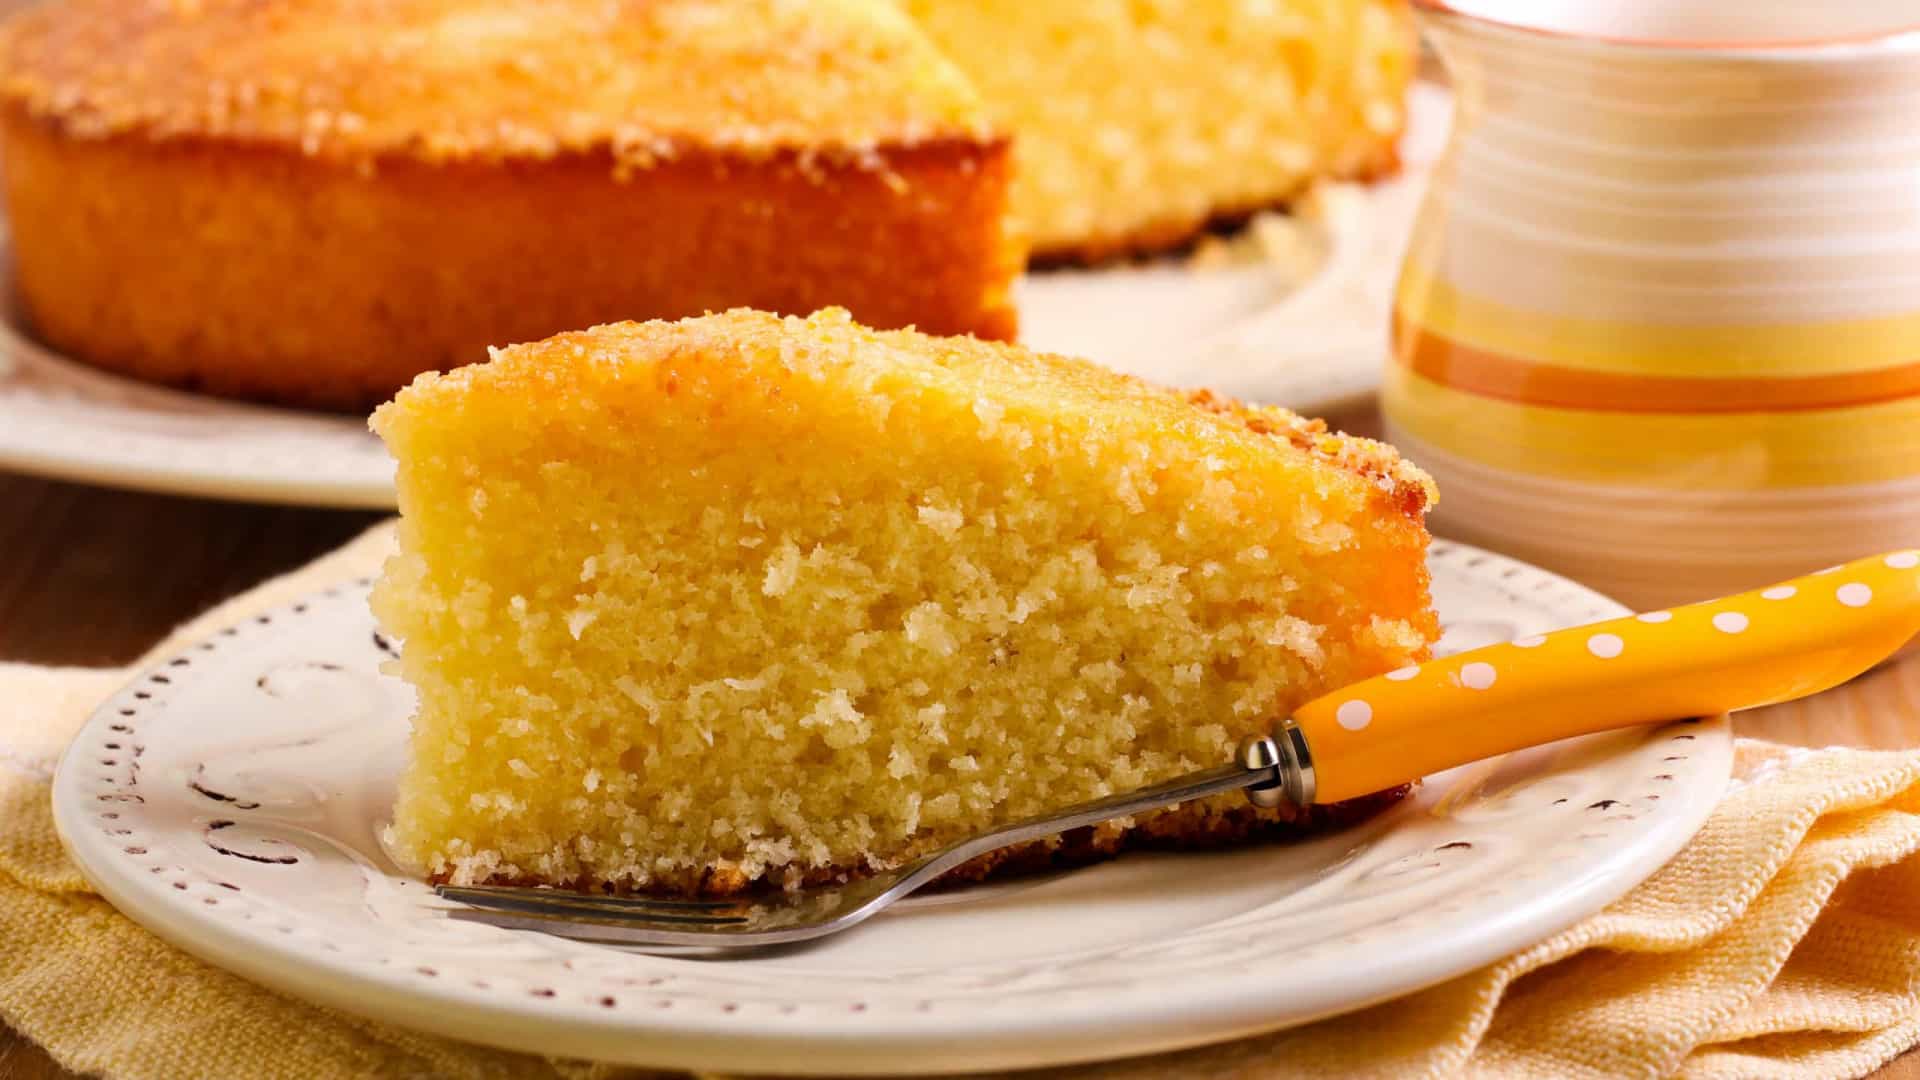 Prepare um delicioso bolo de laranja com apenas 4 ingredientes